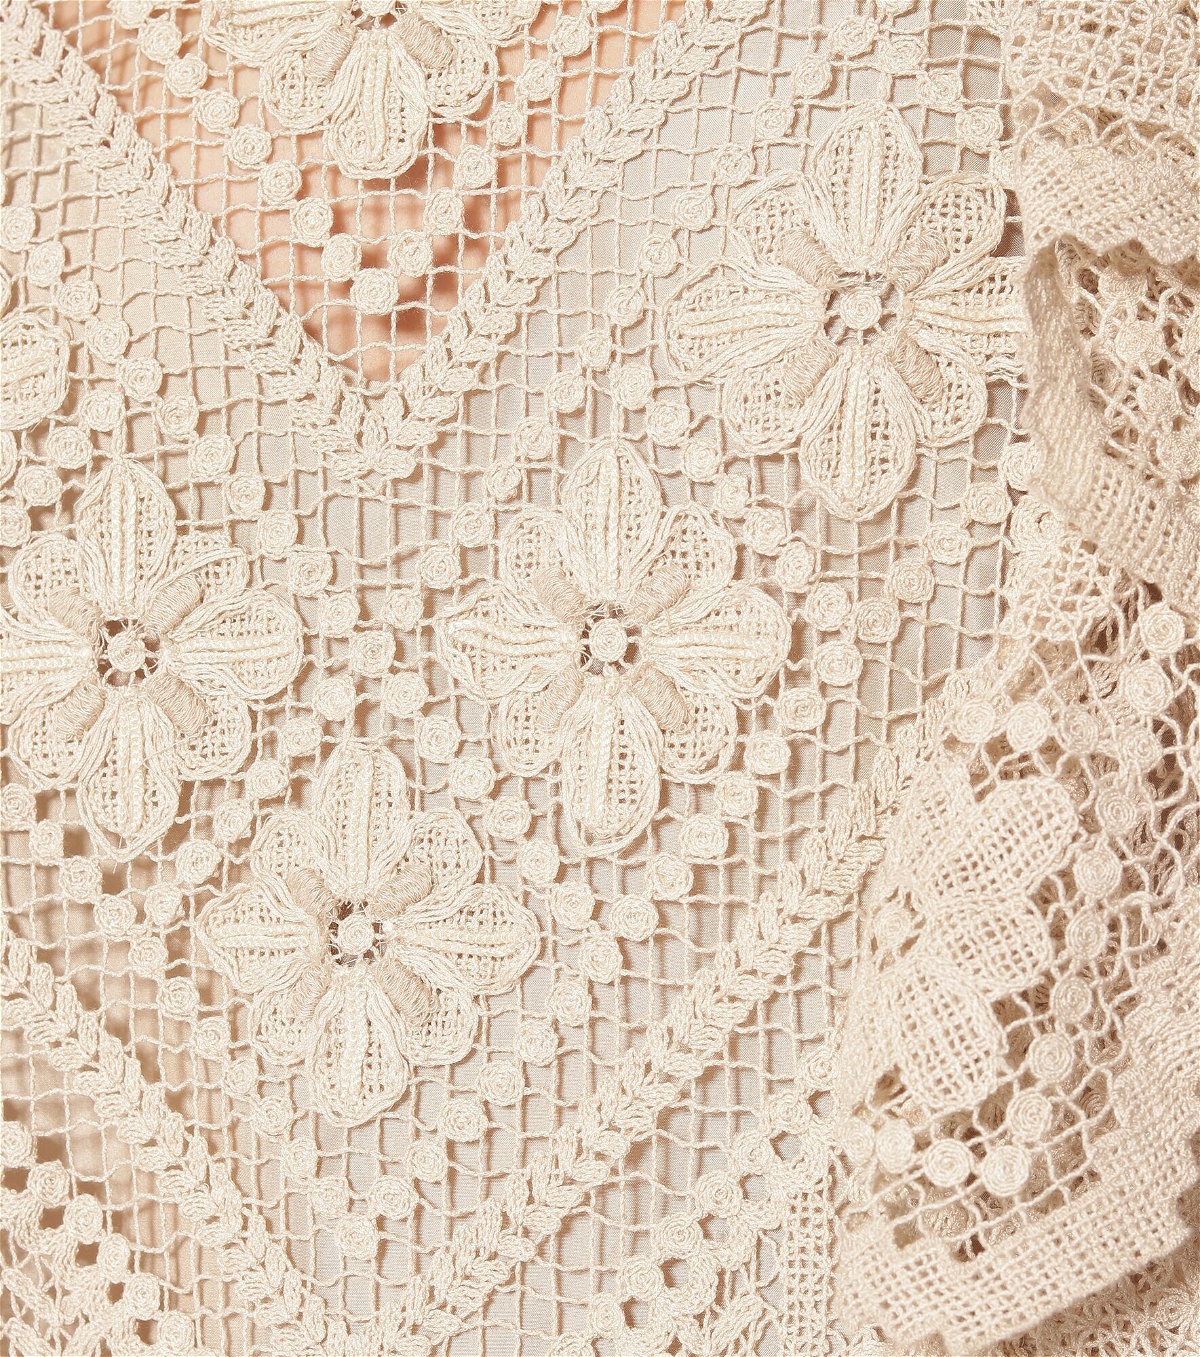 Isabel Marant - Zanetti crocheted cotton minidress Isabel Marant